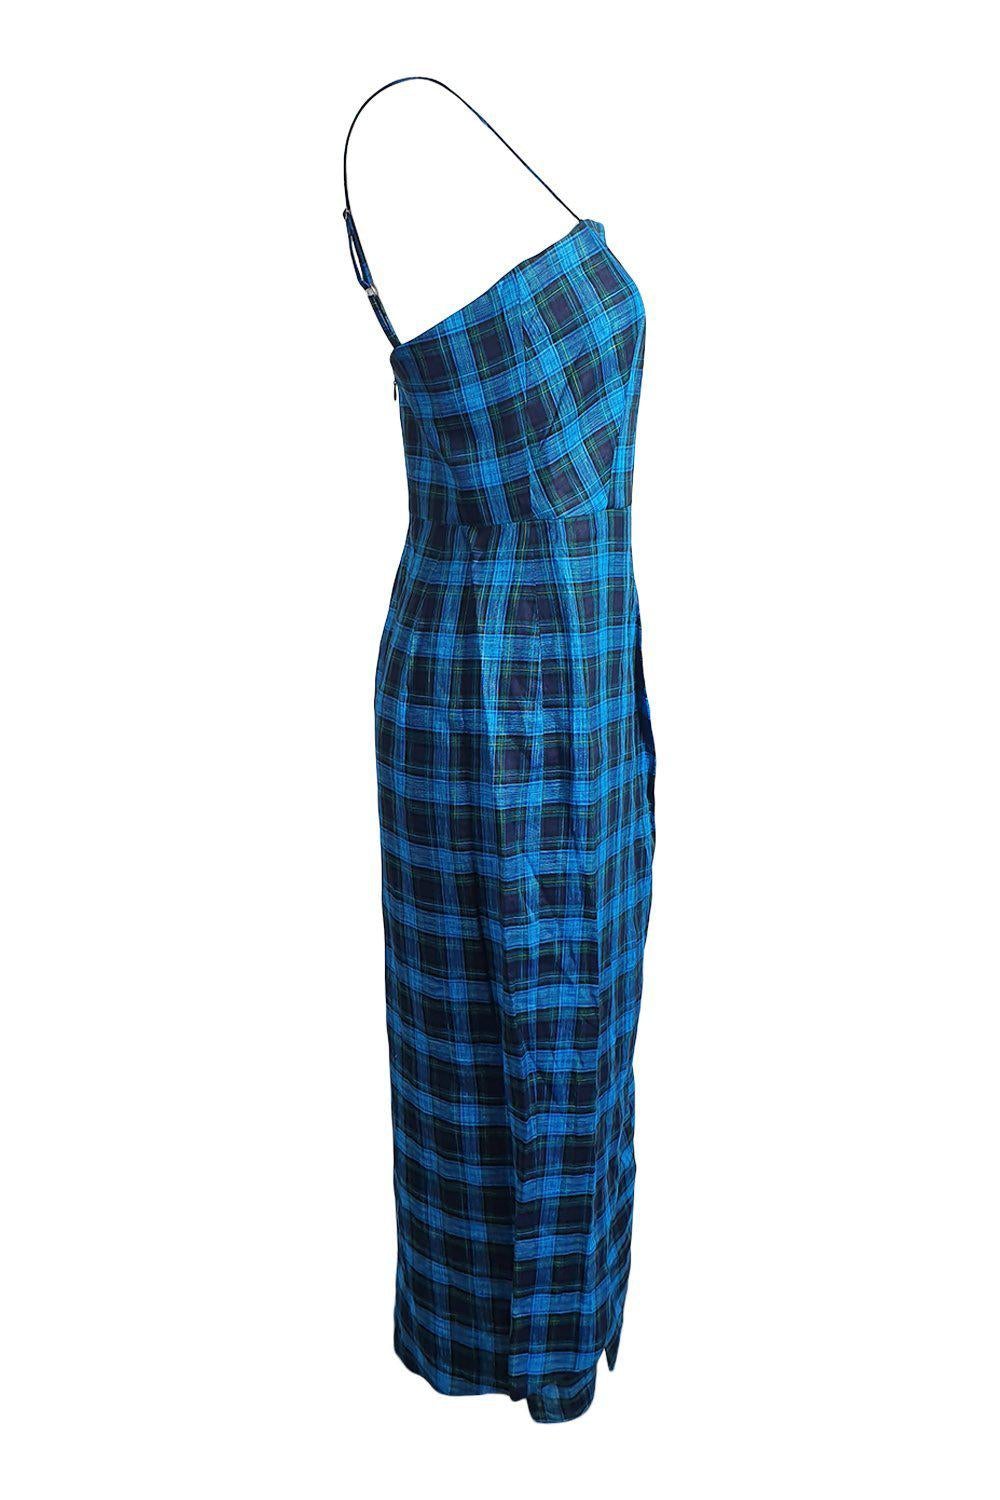 OSMAN LONDON SS 2019 100% Cotton Blue Gingham Corset Dress (UK 08)-The Freperie